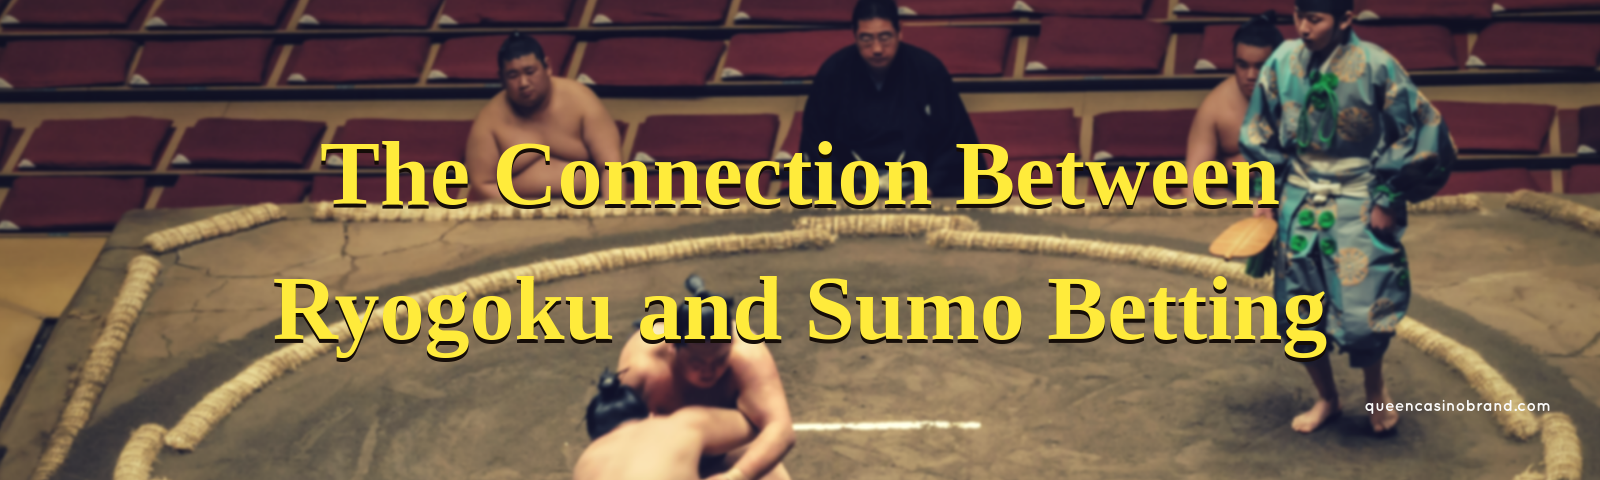 The Connection Between Ryogoku and Sumo Betting